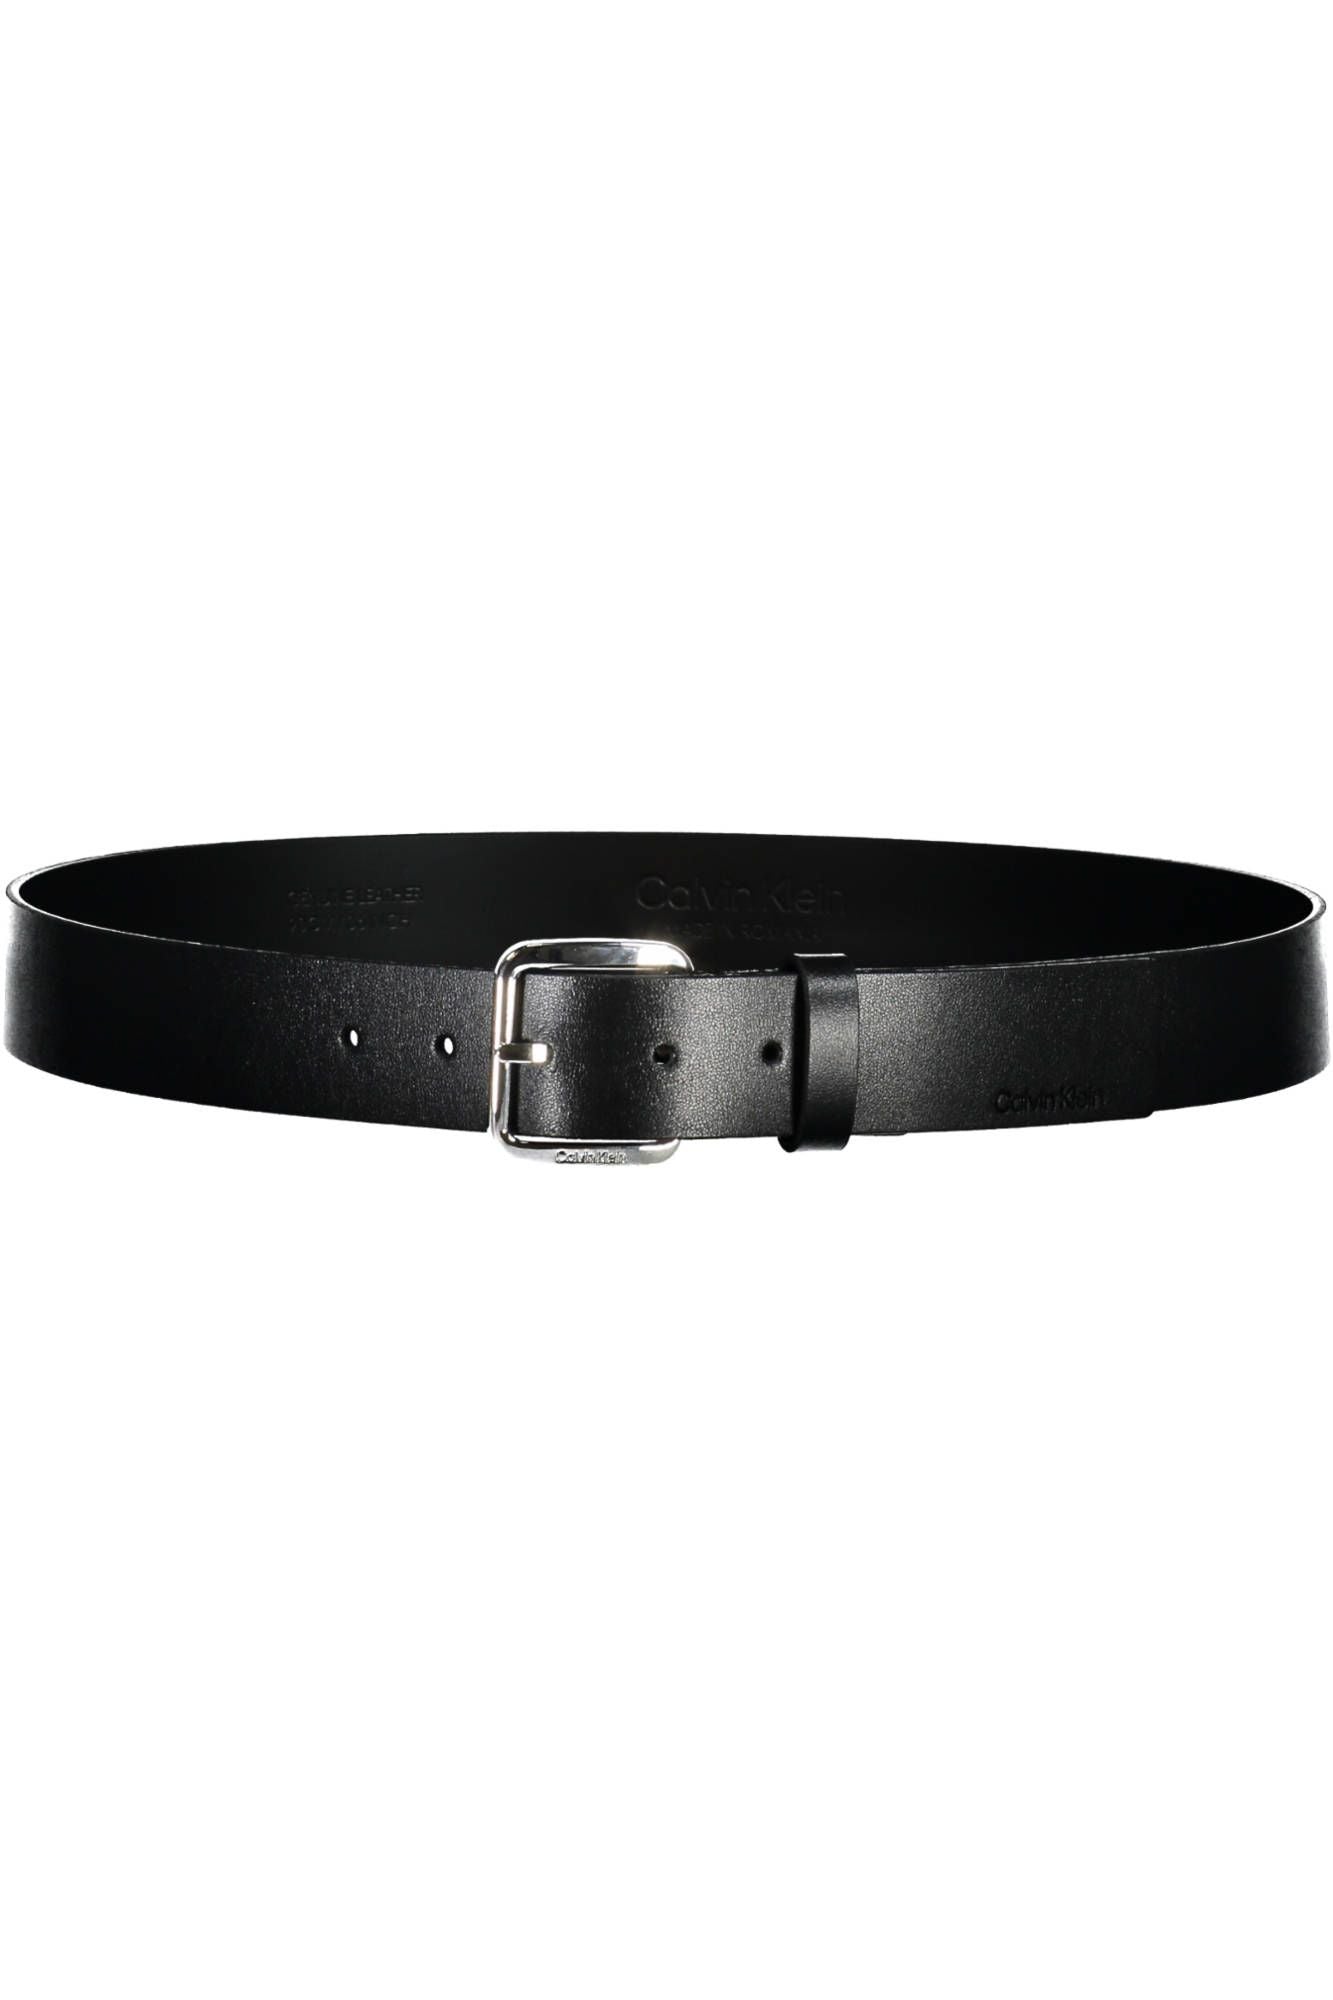 Sleek Black Leather Belt with Metal Buckle